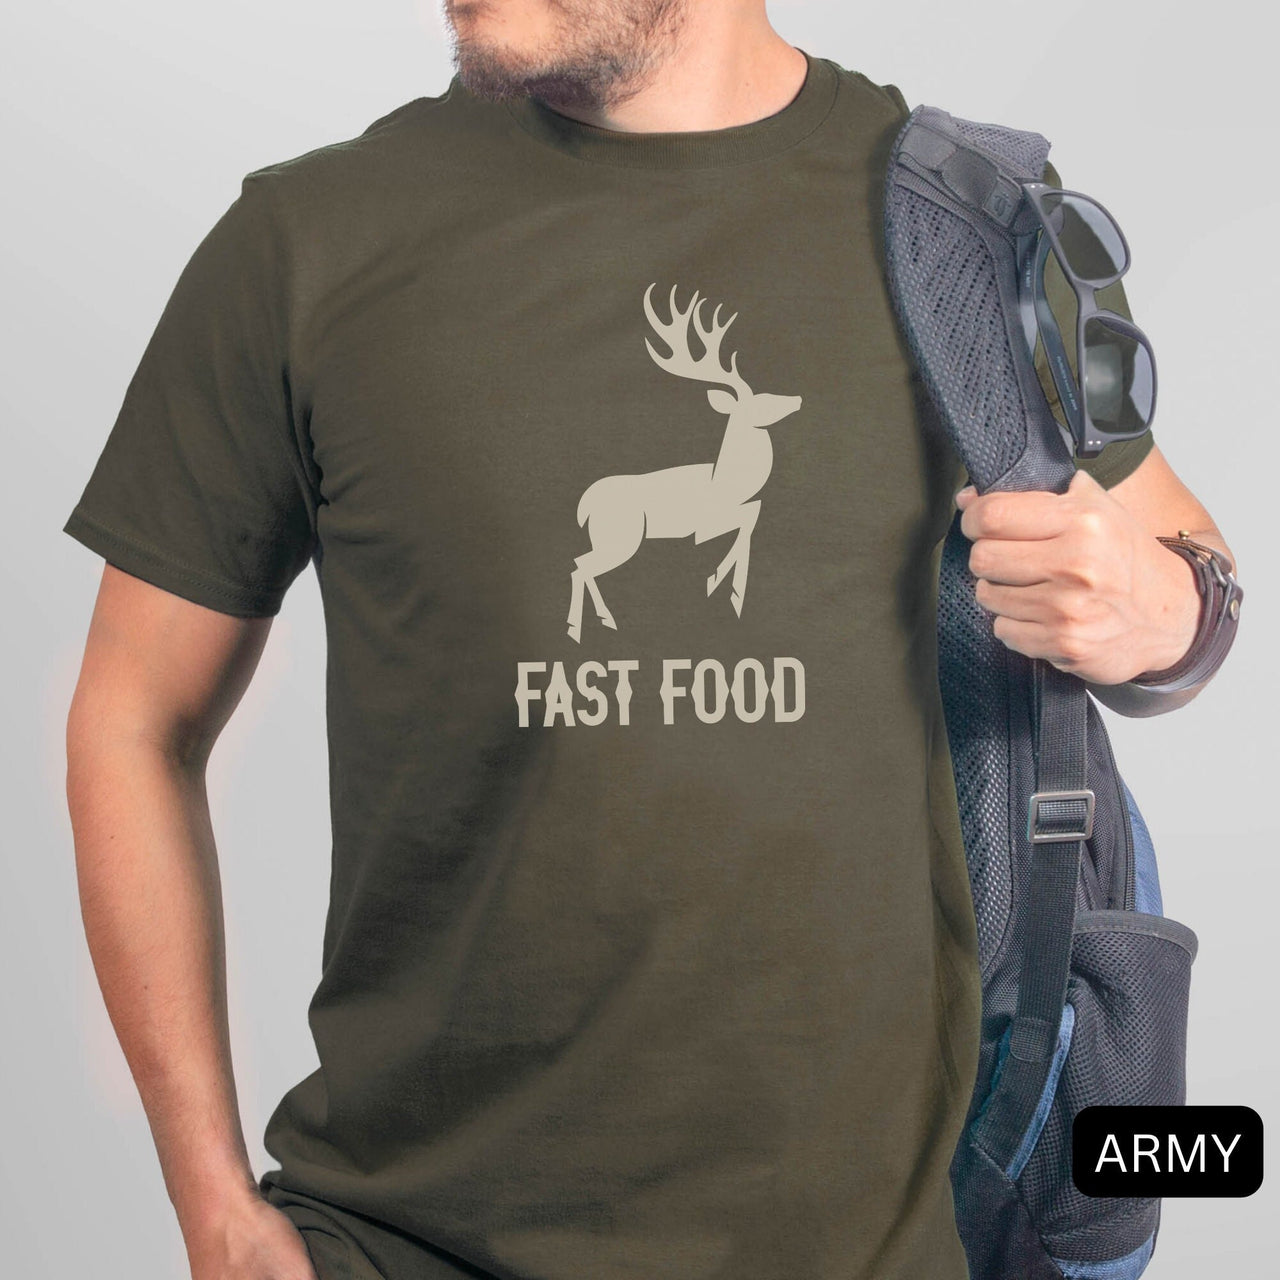 Unisex Fast Food Hunting Tshirt for Men